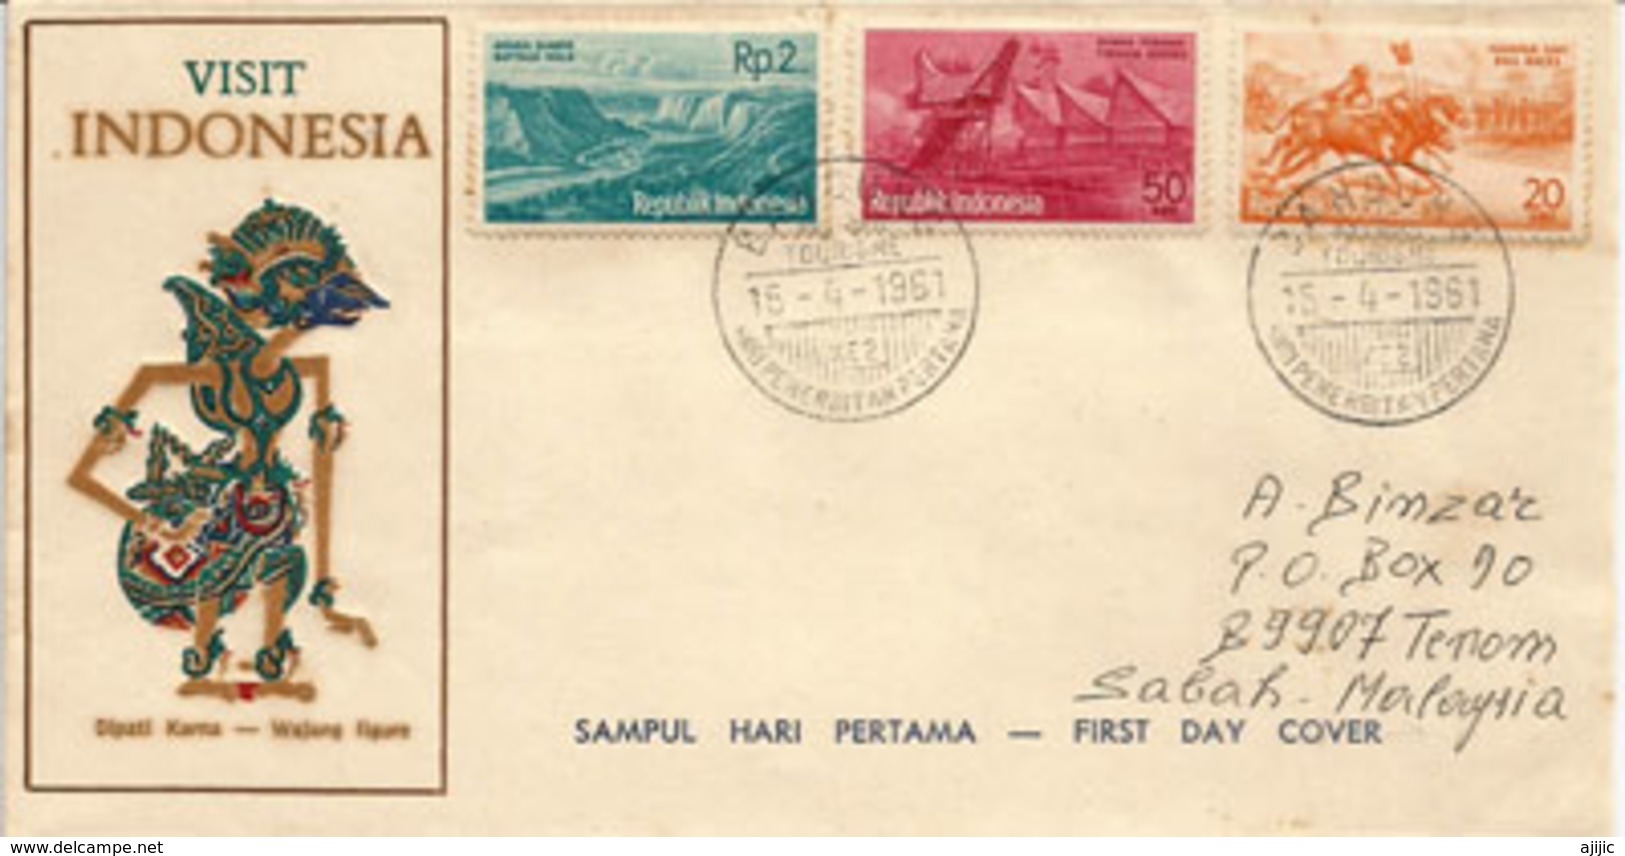 Visit Indonesia 1961.Hindu Sun God Karna., FDC Letter Bandung.Indonesia, Addressed To Sabah.Malaysia - Hinduismo